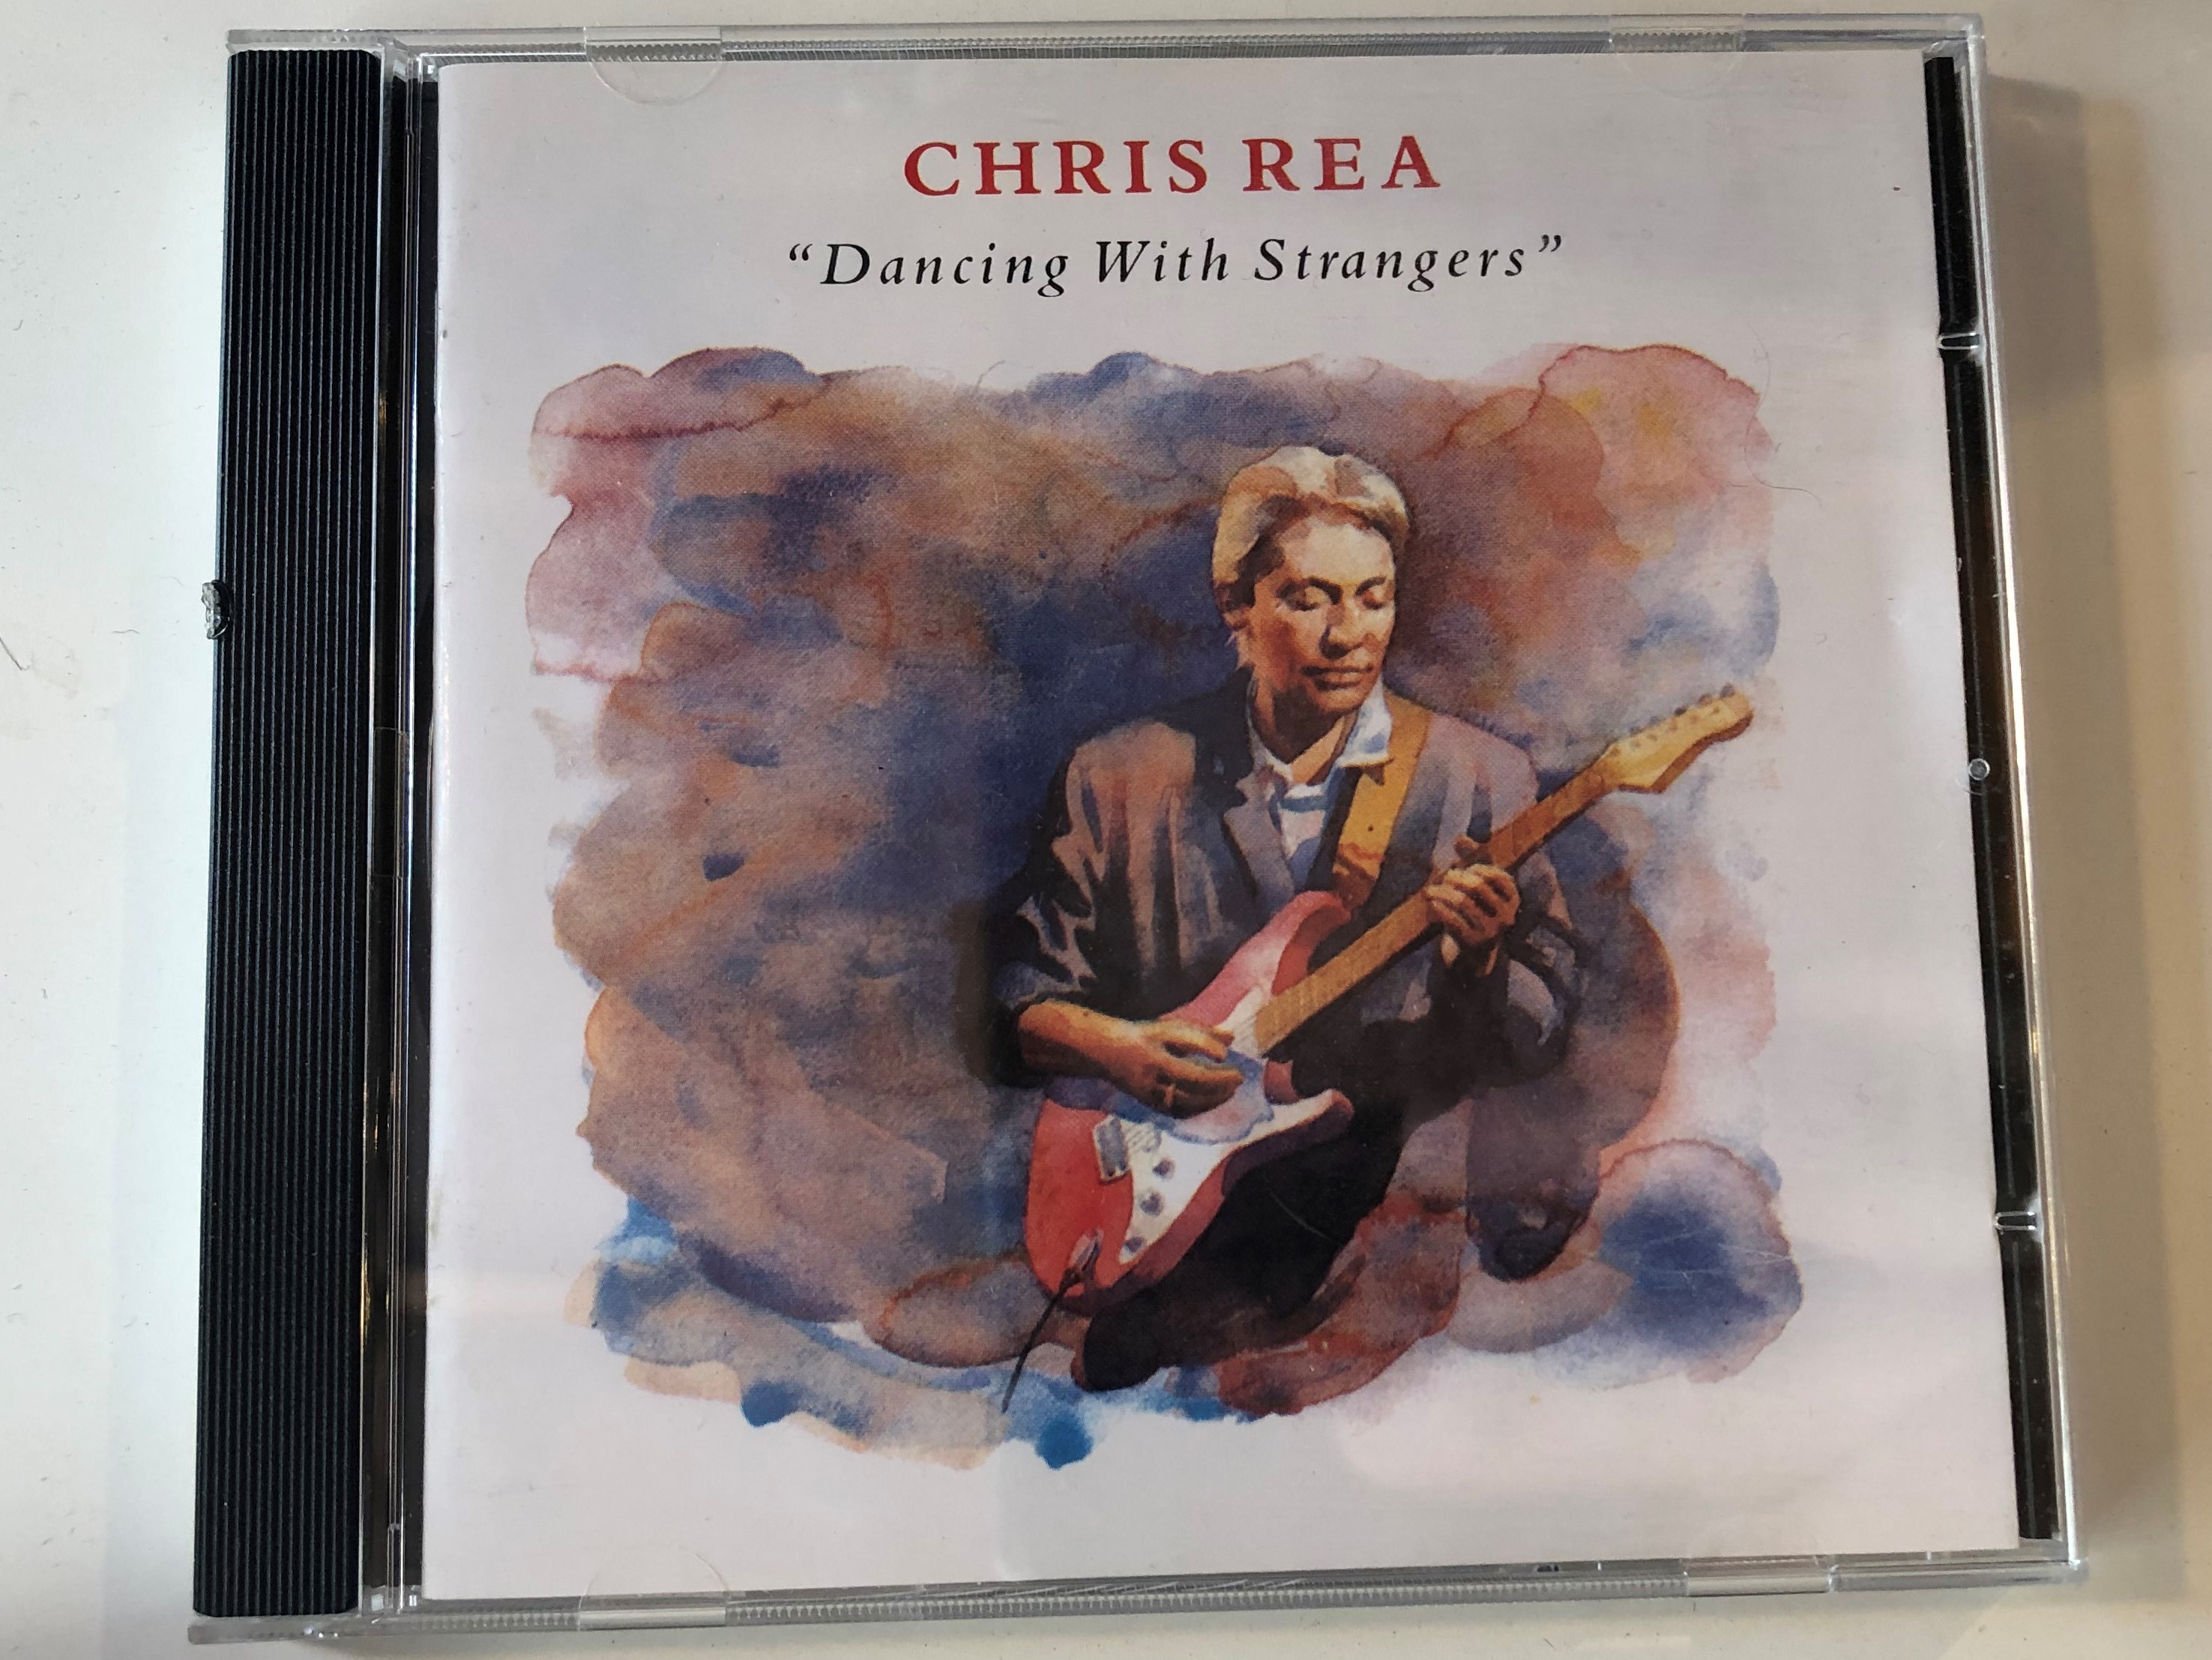 chris-rea-dancing-with-strangers-eastwest-audio-cd-1987-2292-42378-2-1-.jpg